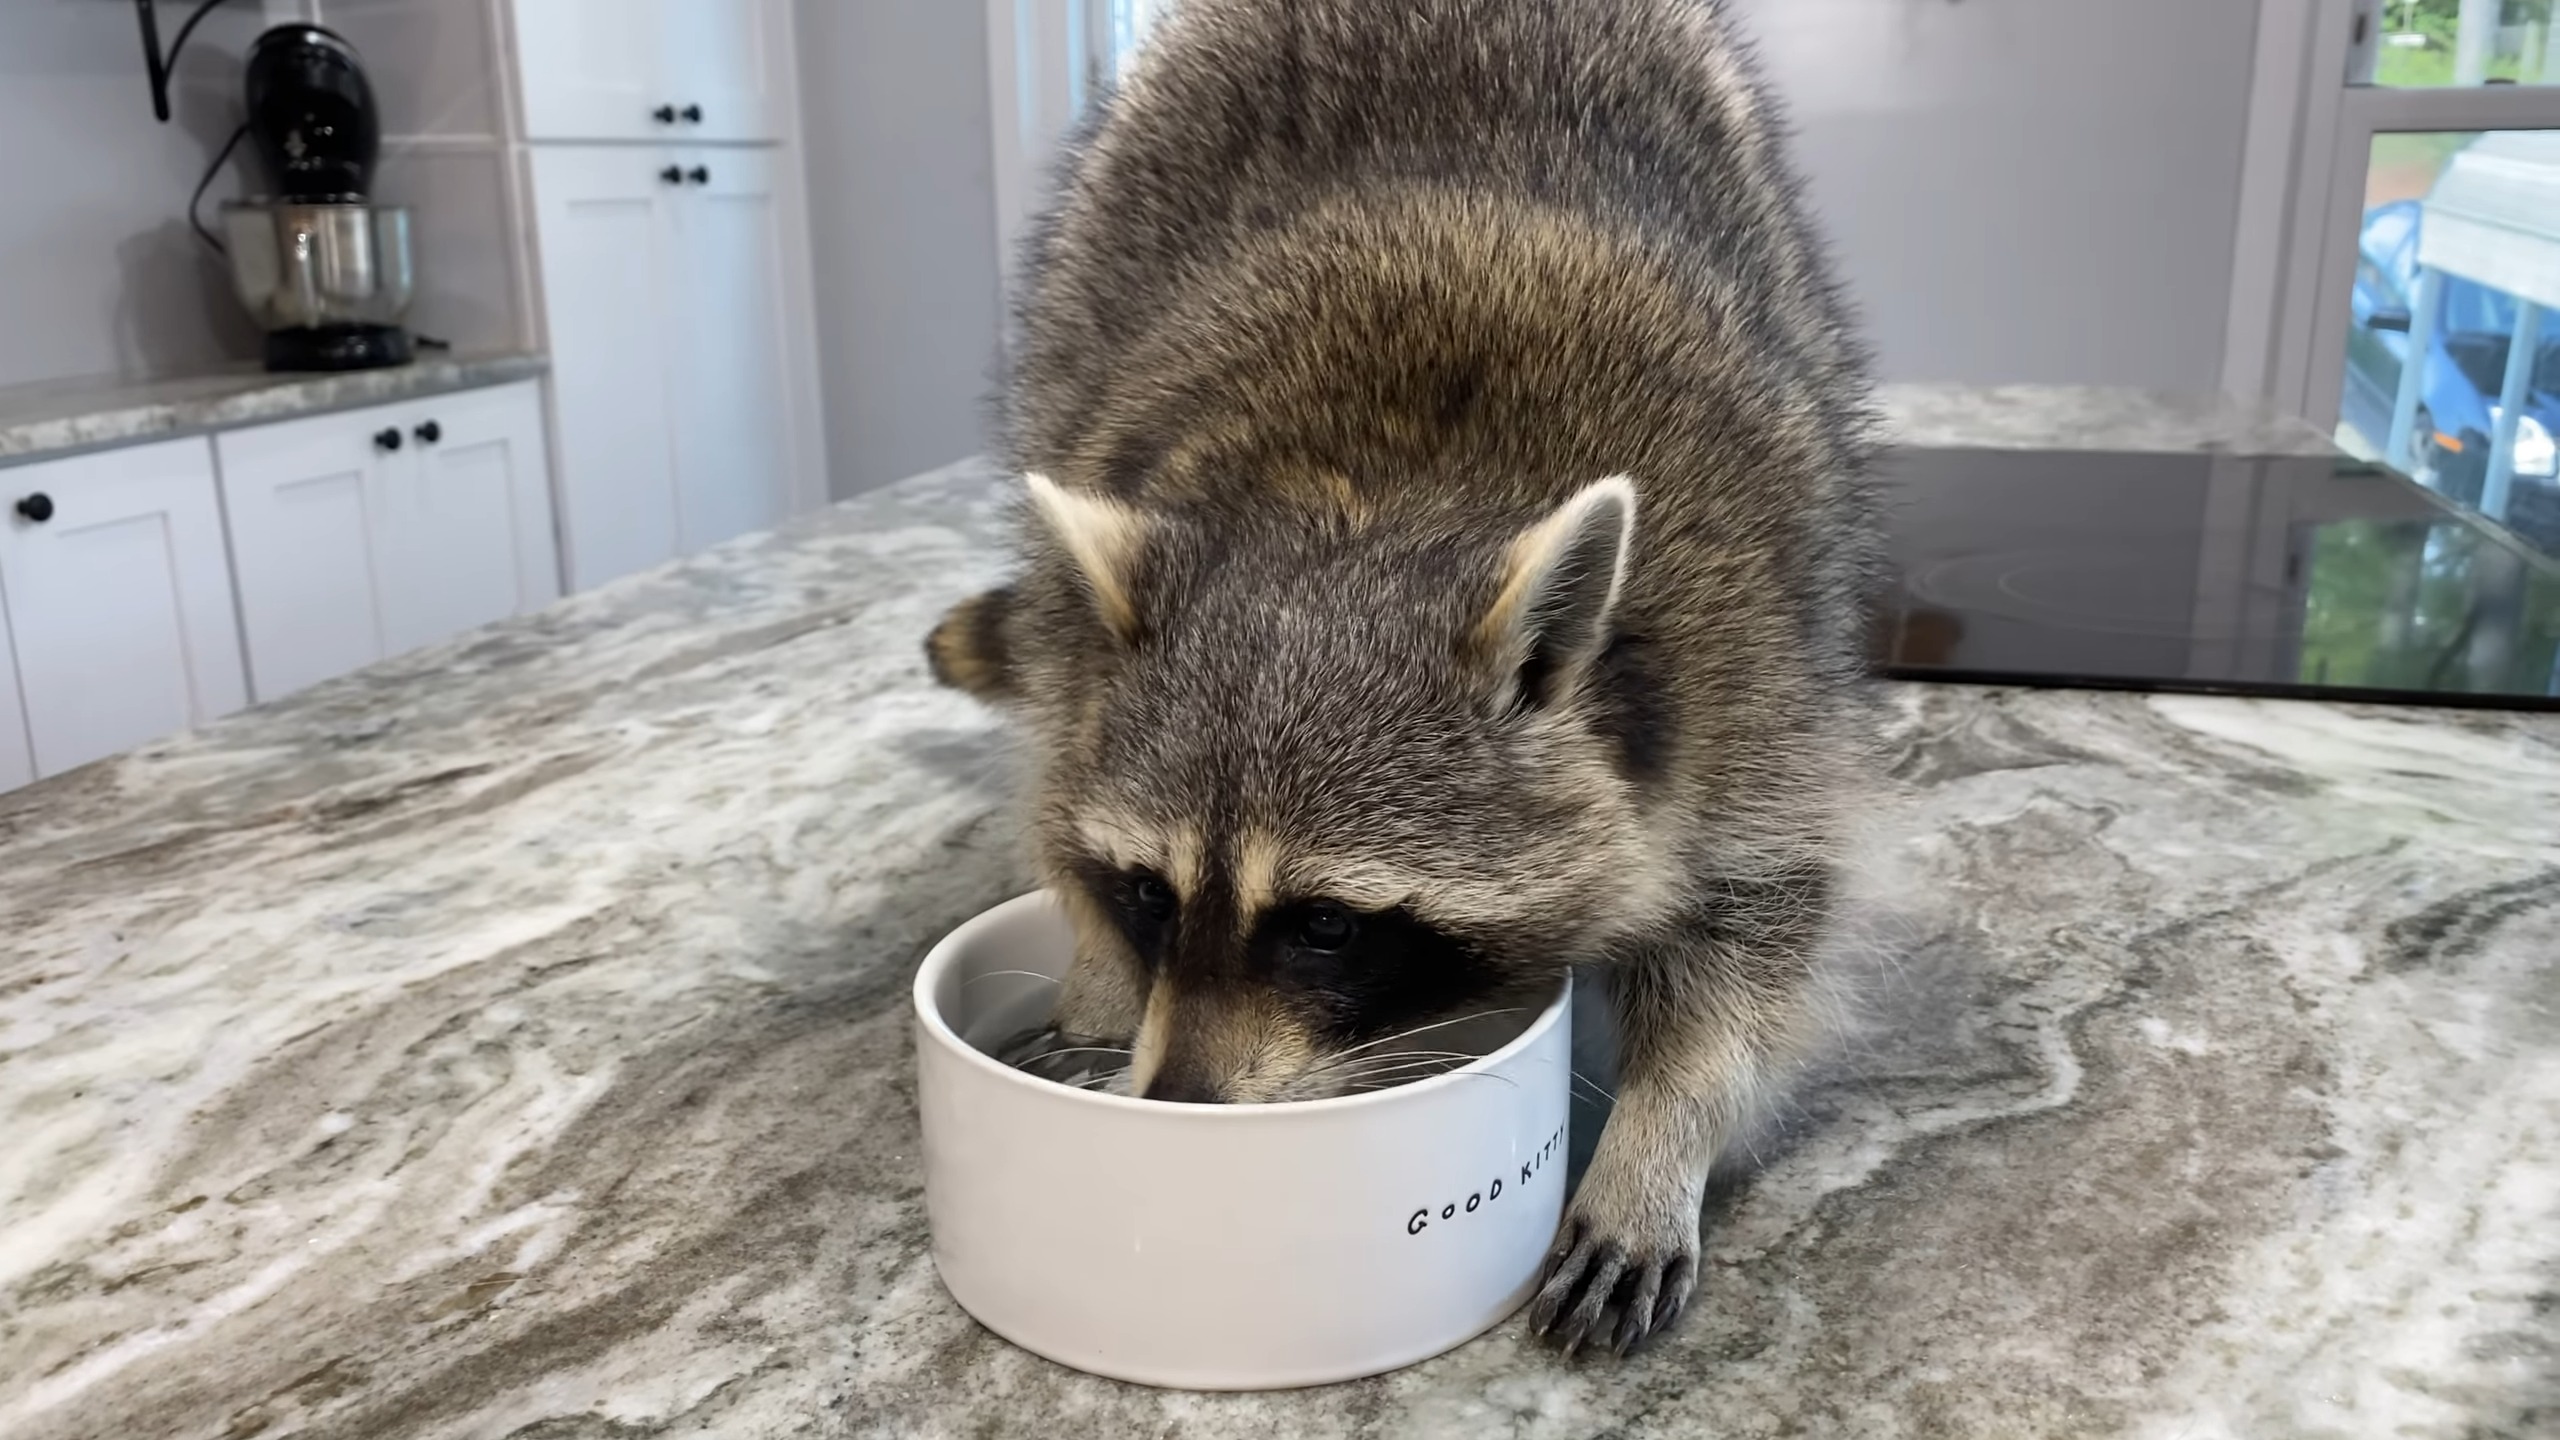 What raccoon eats